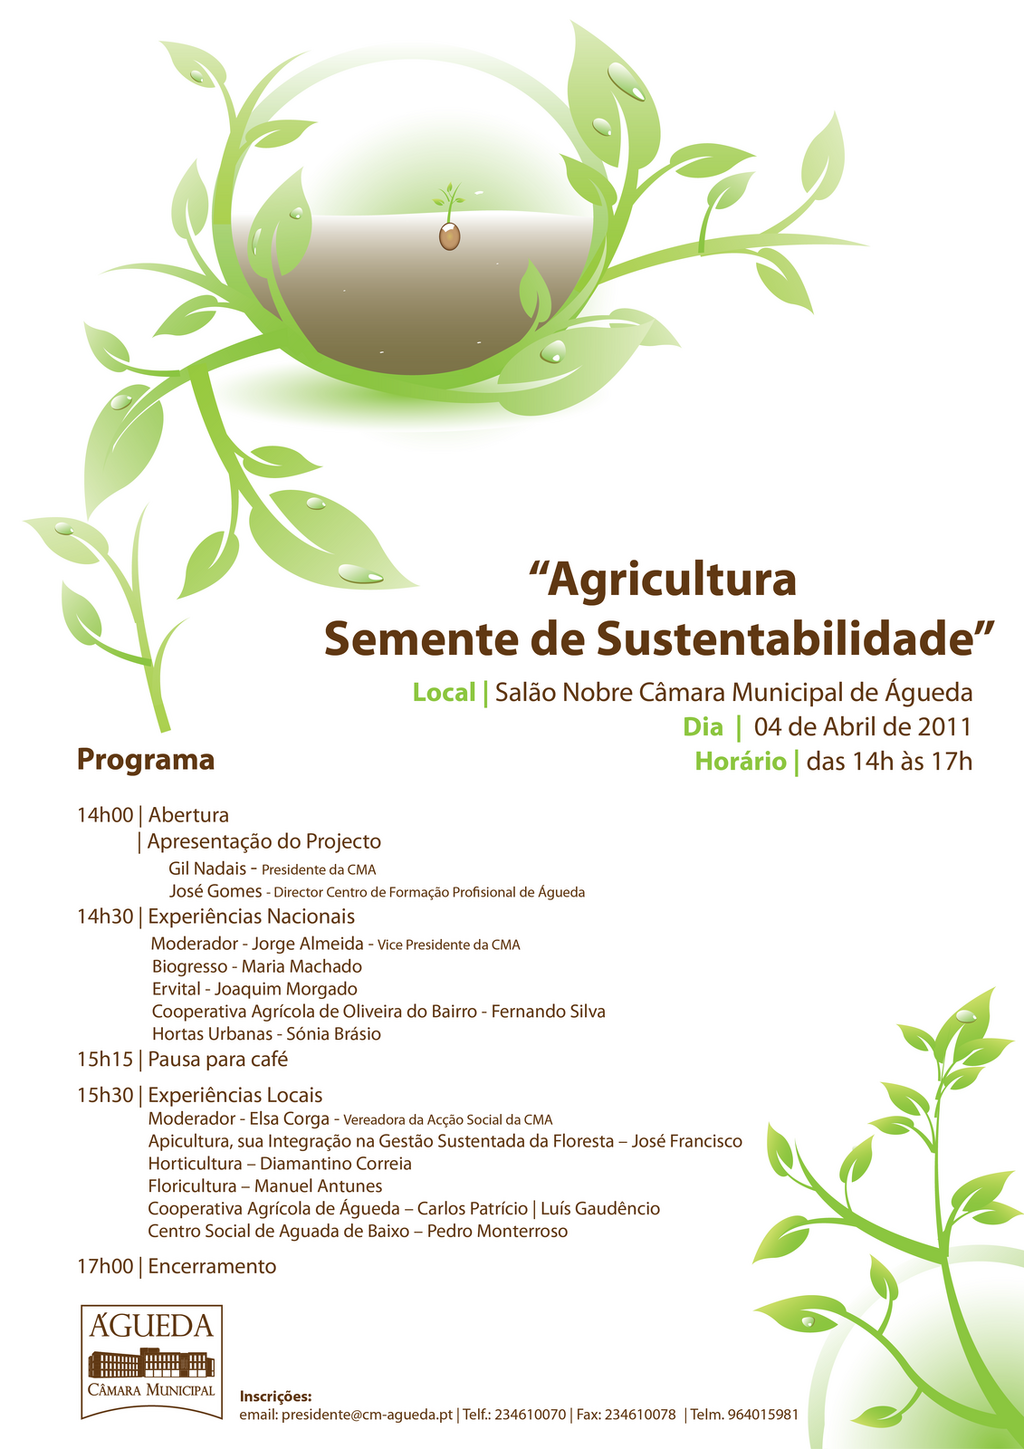 Seminário “Agricultura, semente de sustentabilidade” 